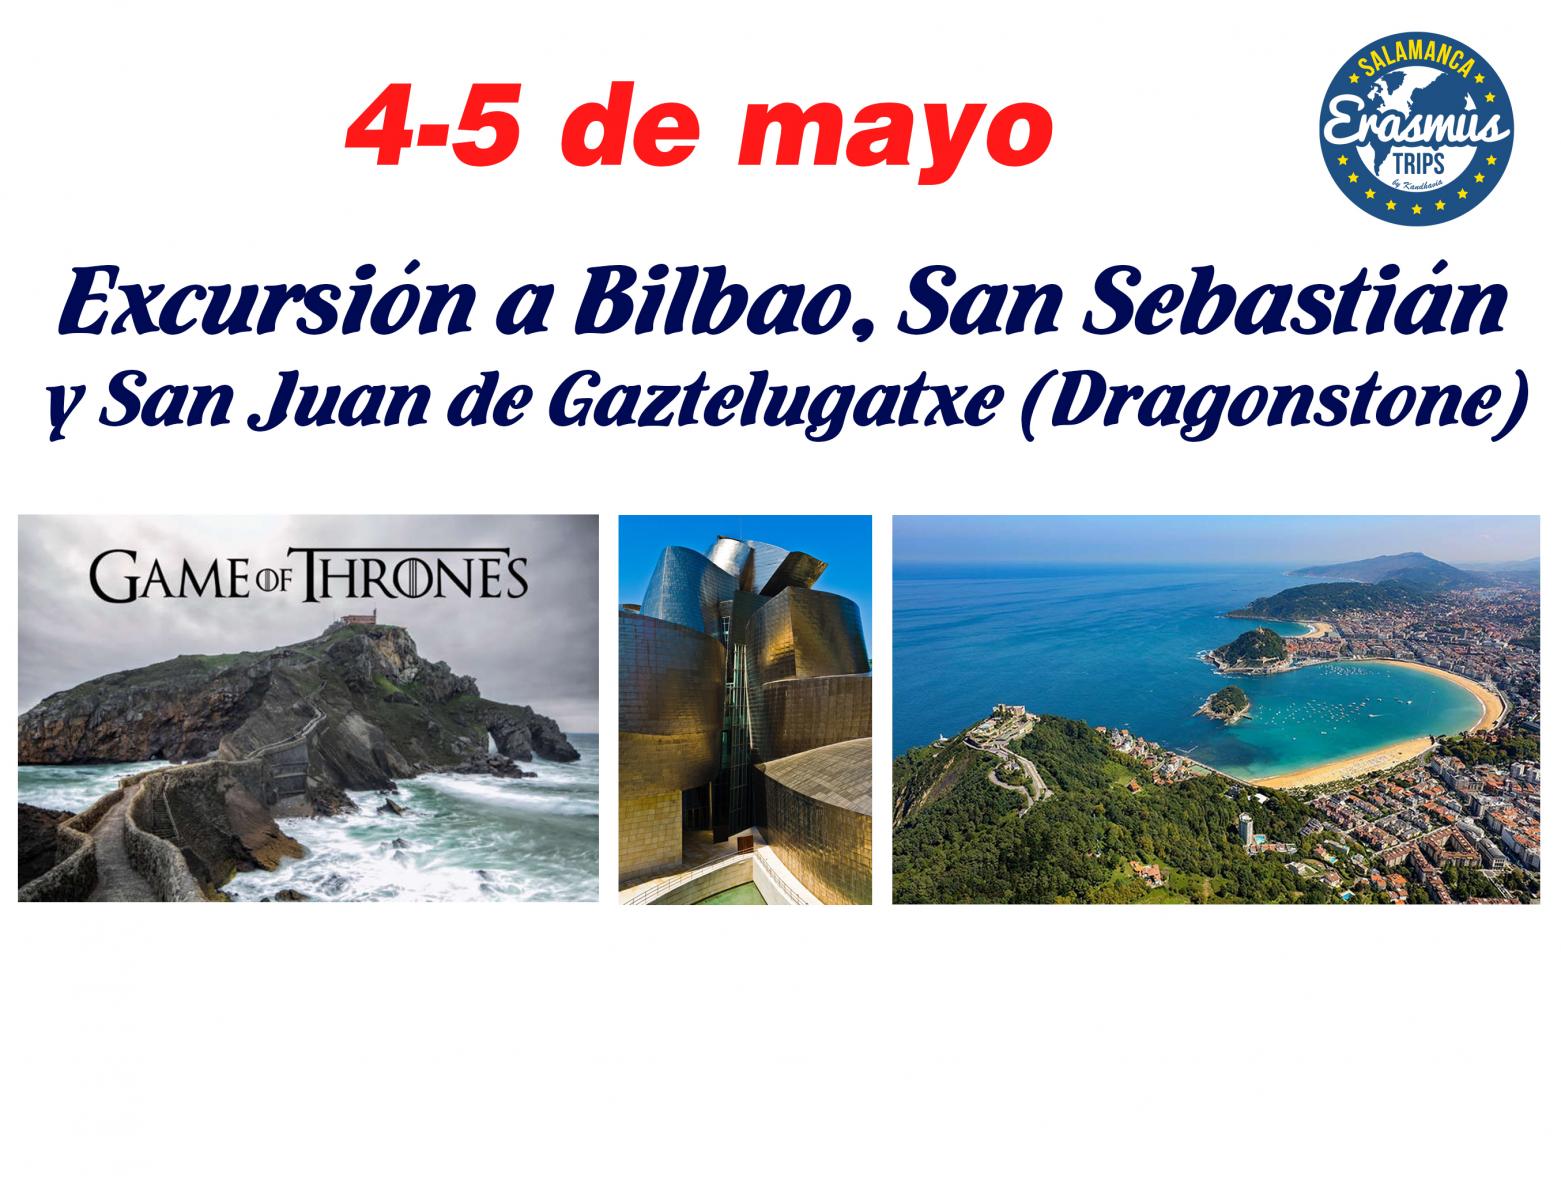  <strong> BILBAO, SAN SEBASTIAN Y SAN JUAN DE GAZTELUGATXE (Dragonstone- Juego de Tronos)